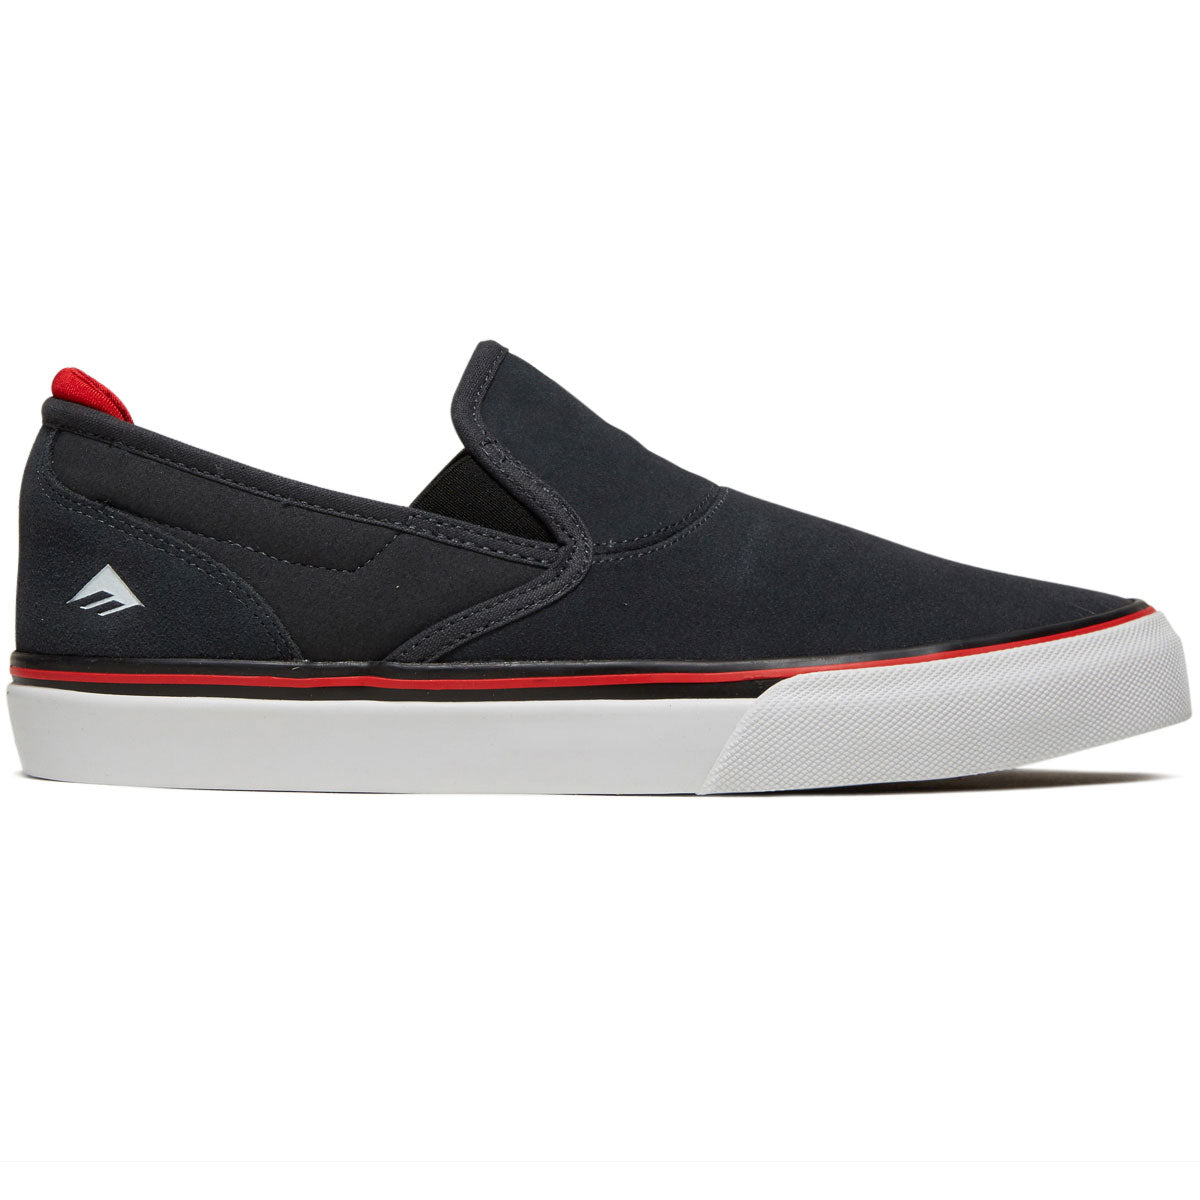 Emerica Wino G6 Slip-on Shoes - Dark Grey/Black/ Red image 1